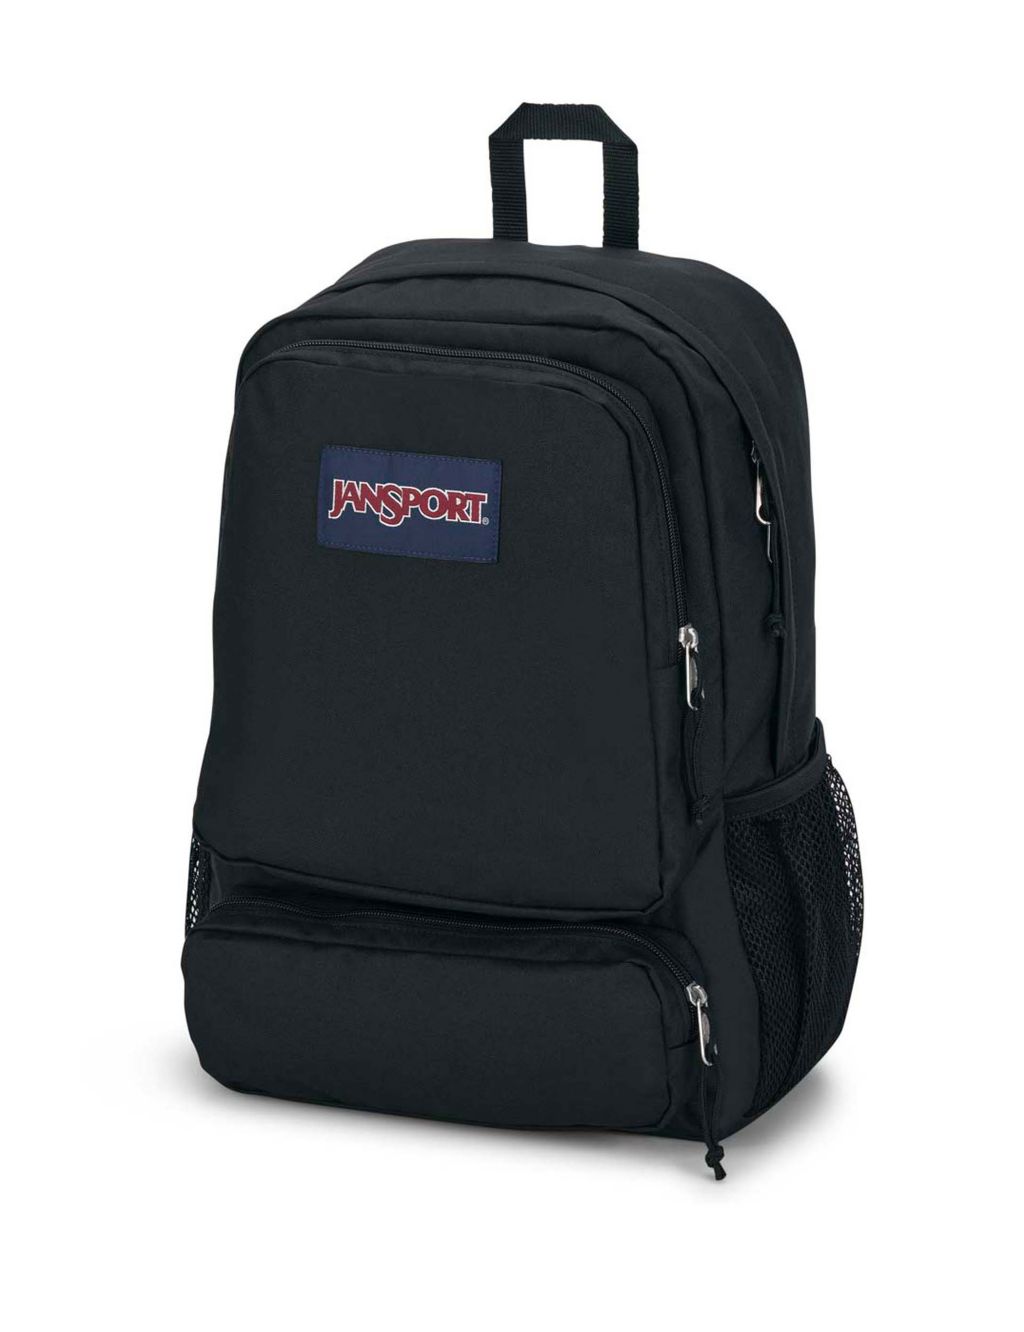 Doubleton Multi Pocket Backpack 1 of 8